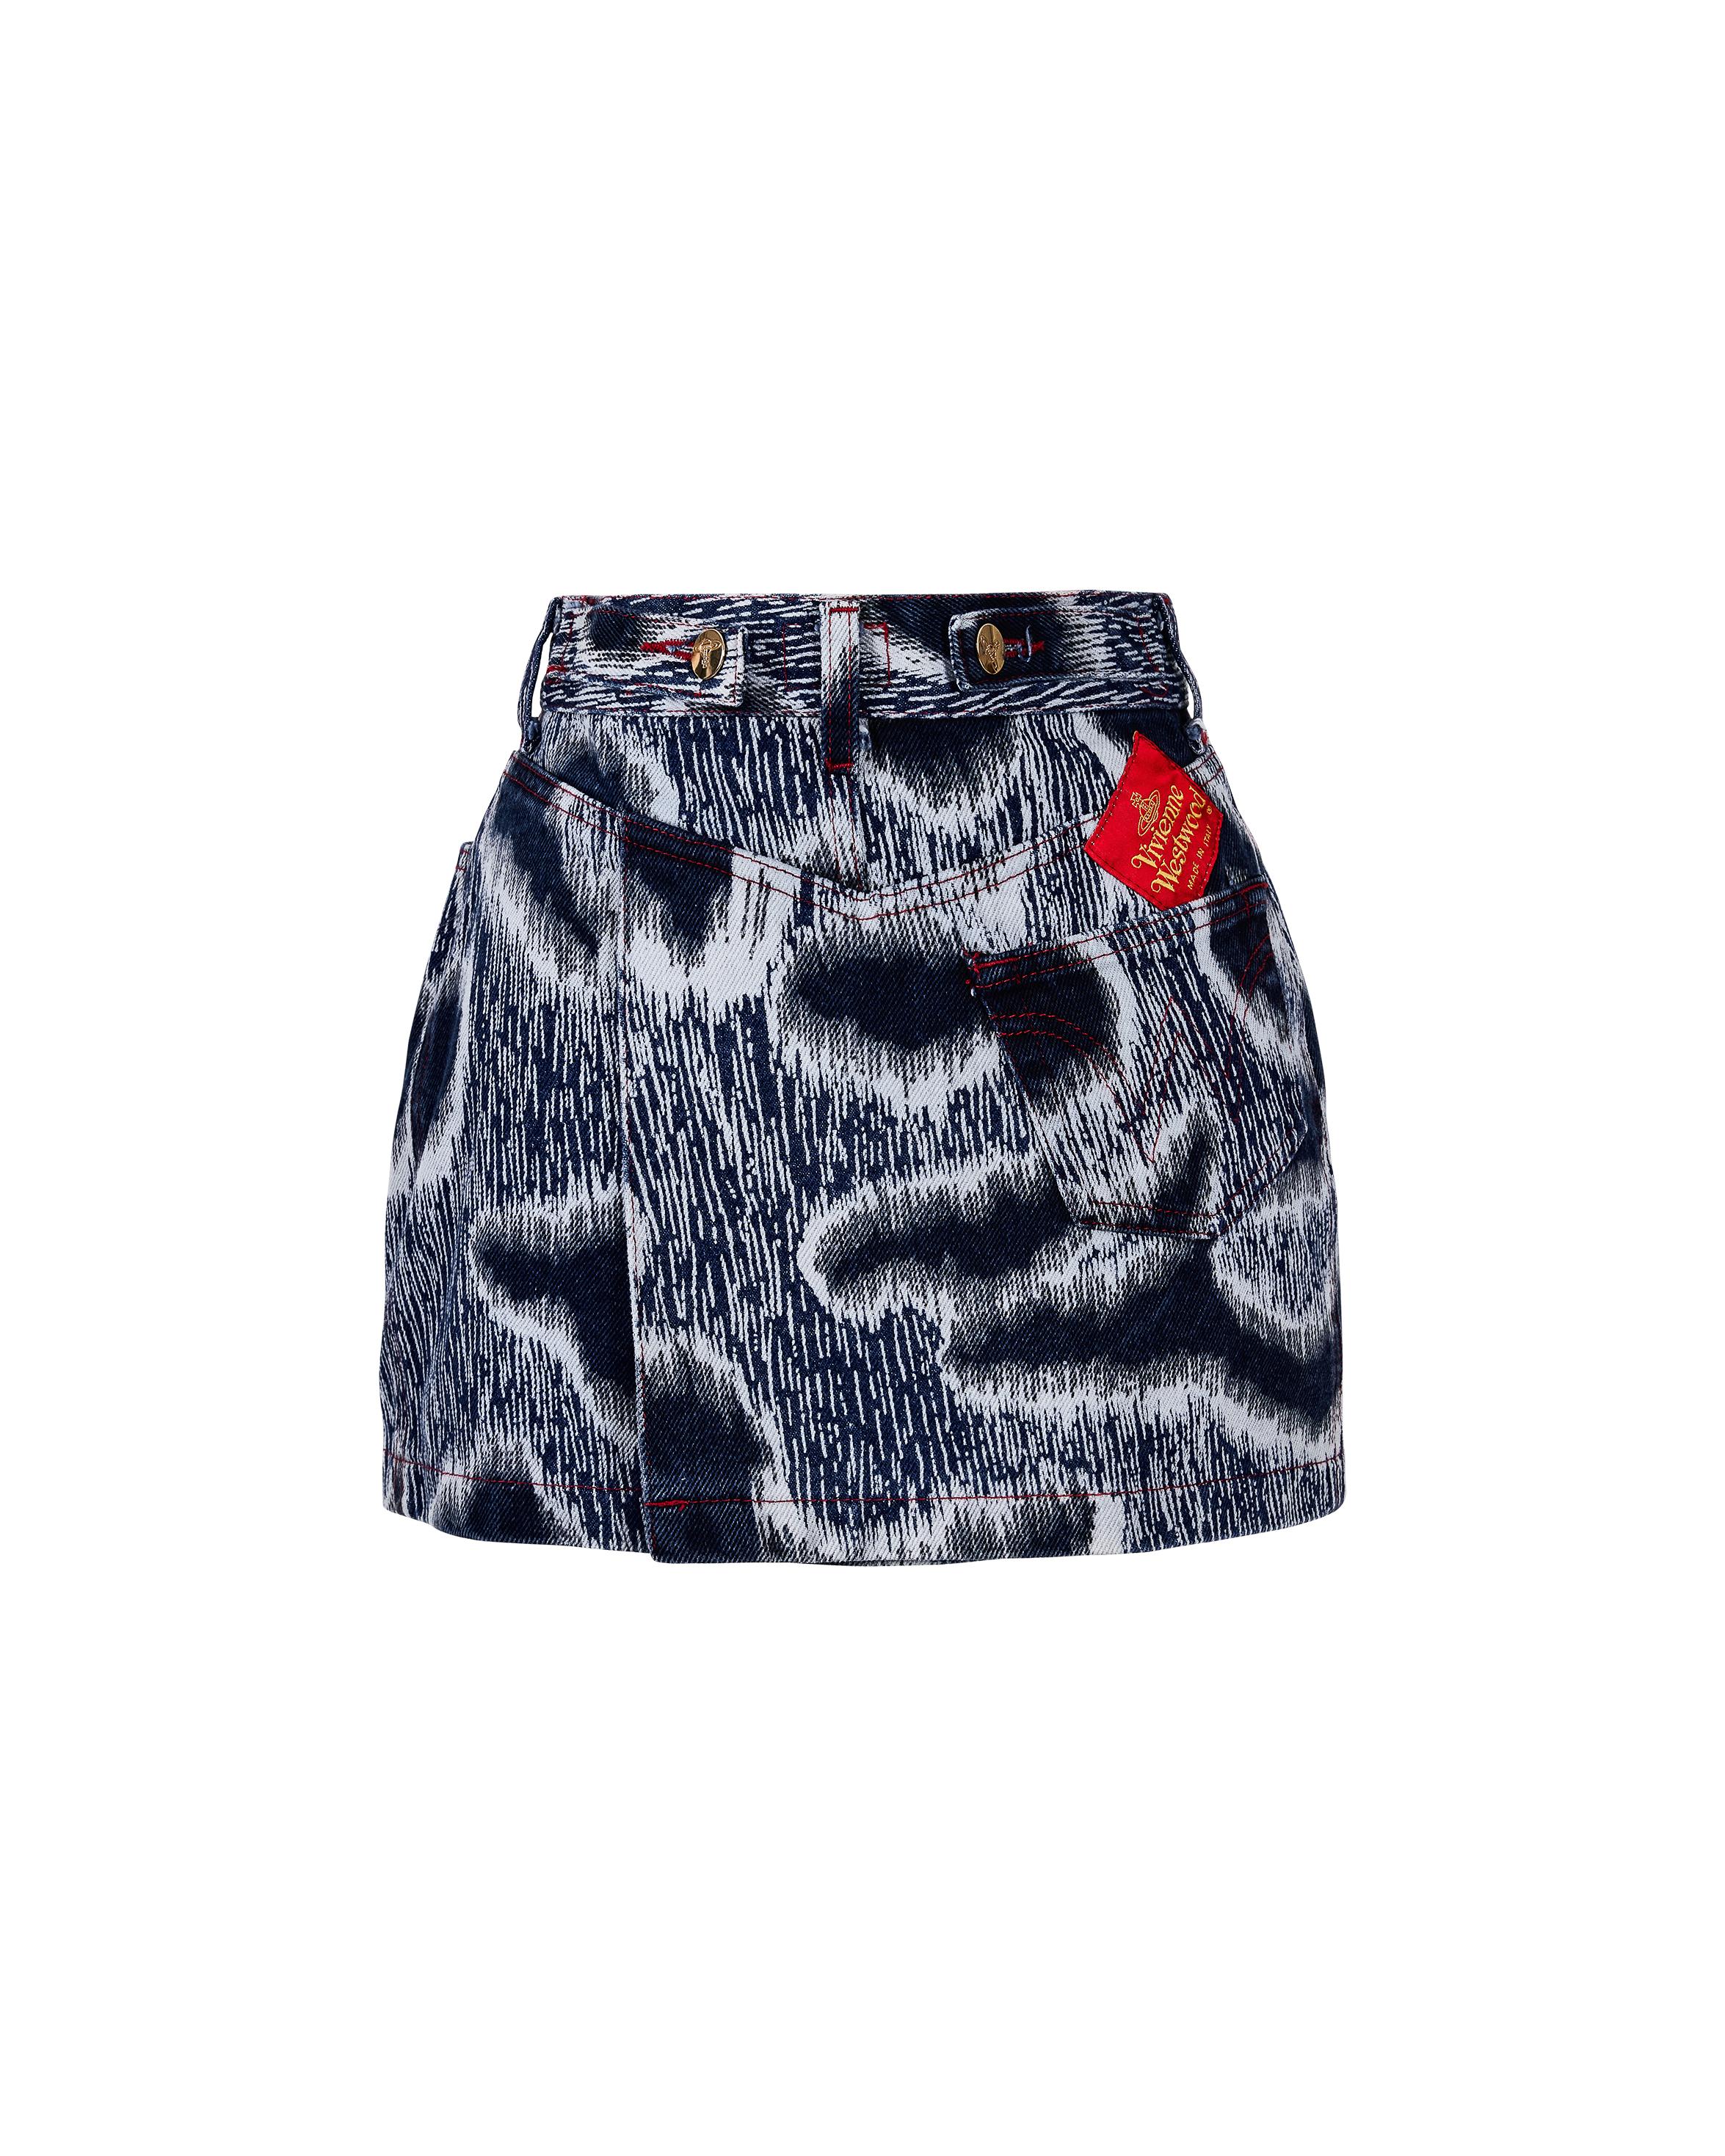 S/S 1994 Vivienne Westwood Blue Leopard Print Denim Skirt Set 7